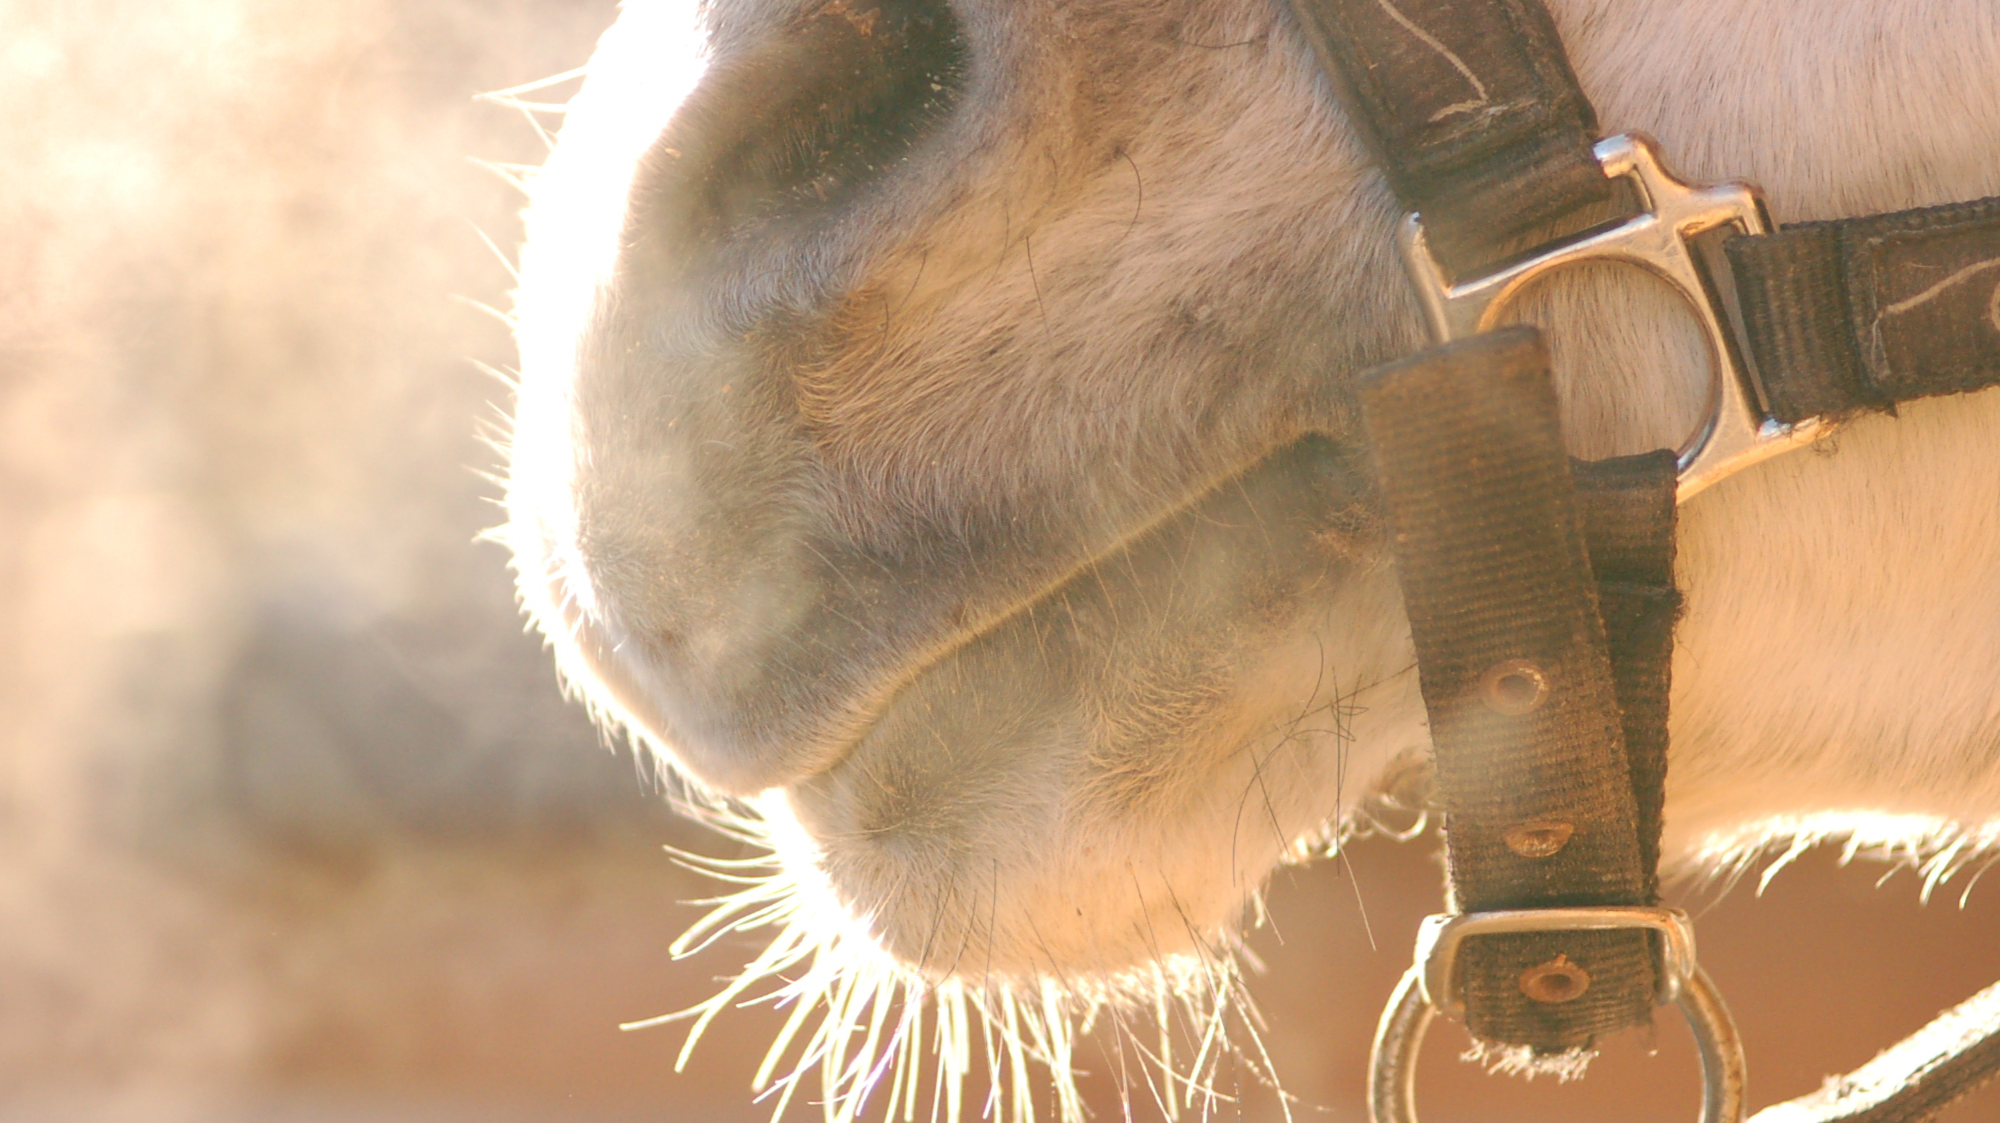 Horses can’t breathe through their mouth